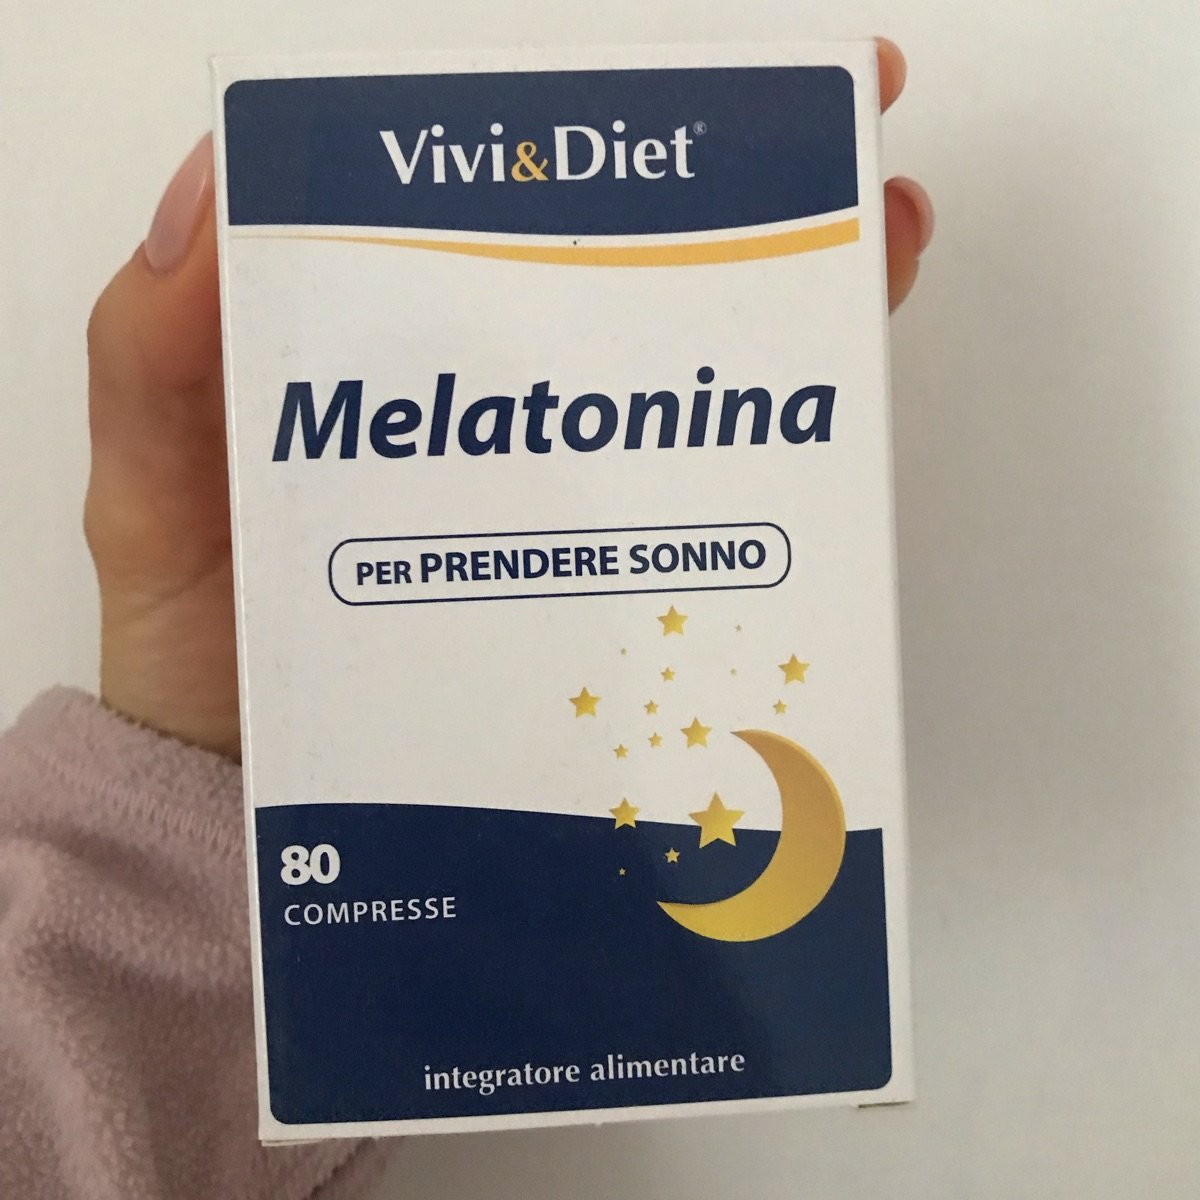 Vivi & diet Melatonina Reviews | abillion